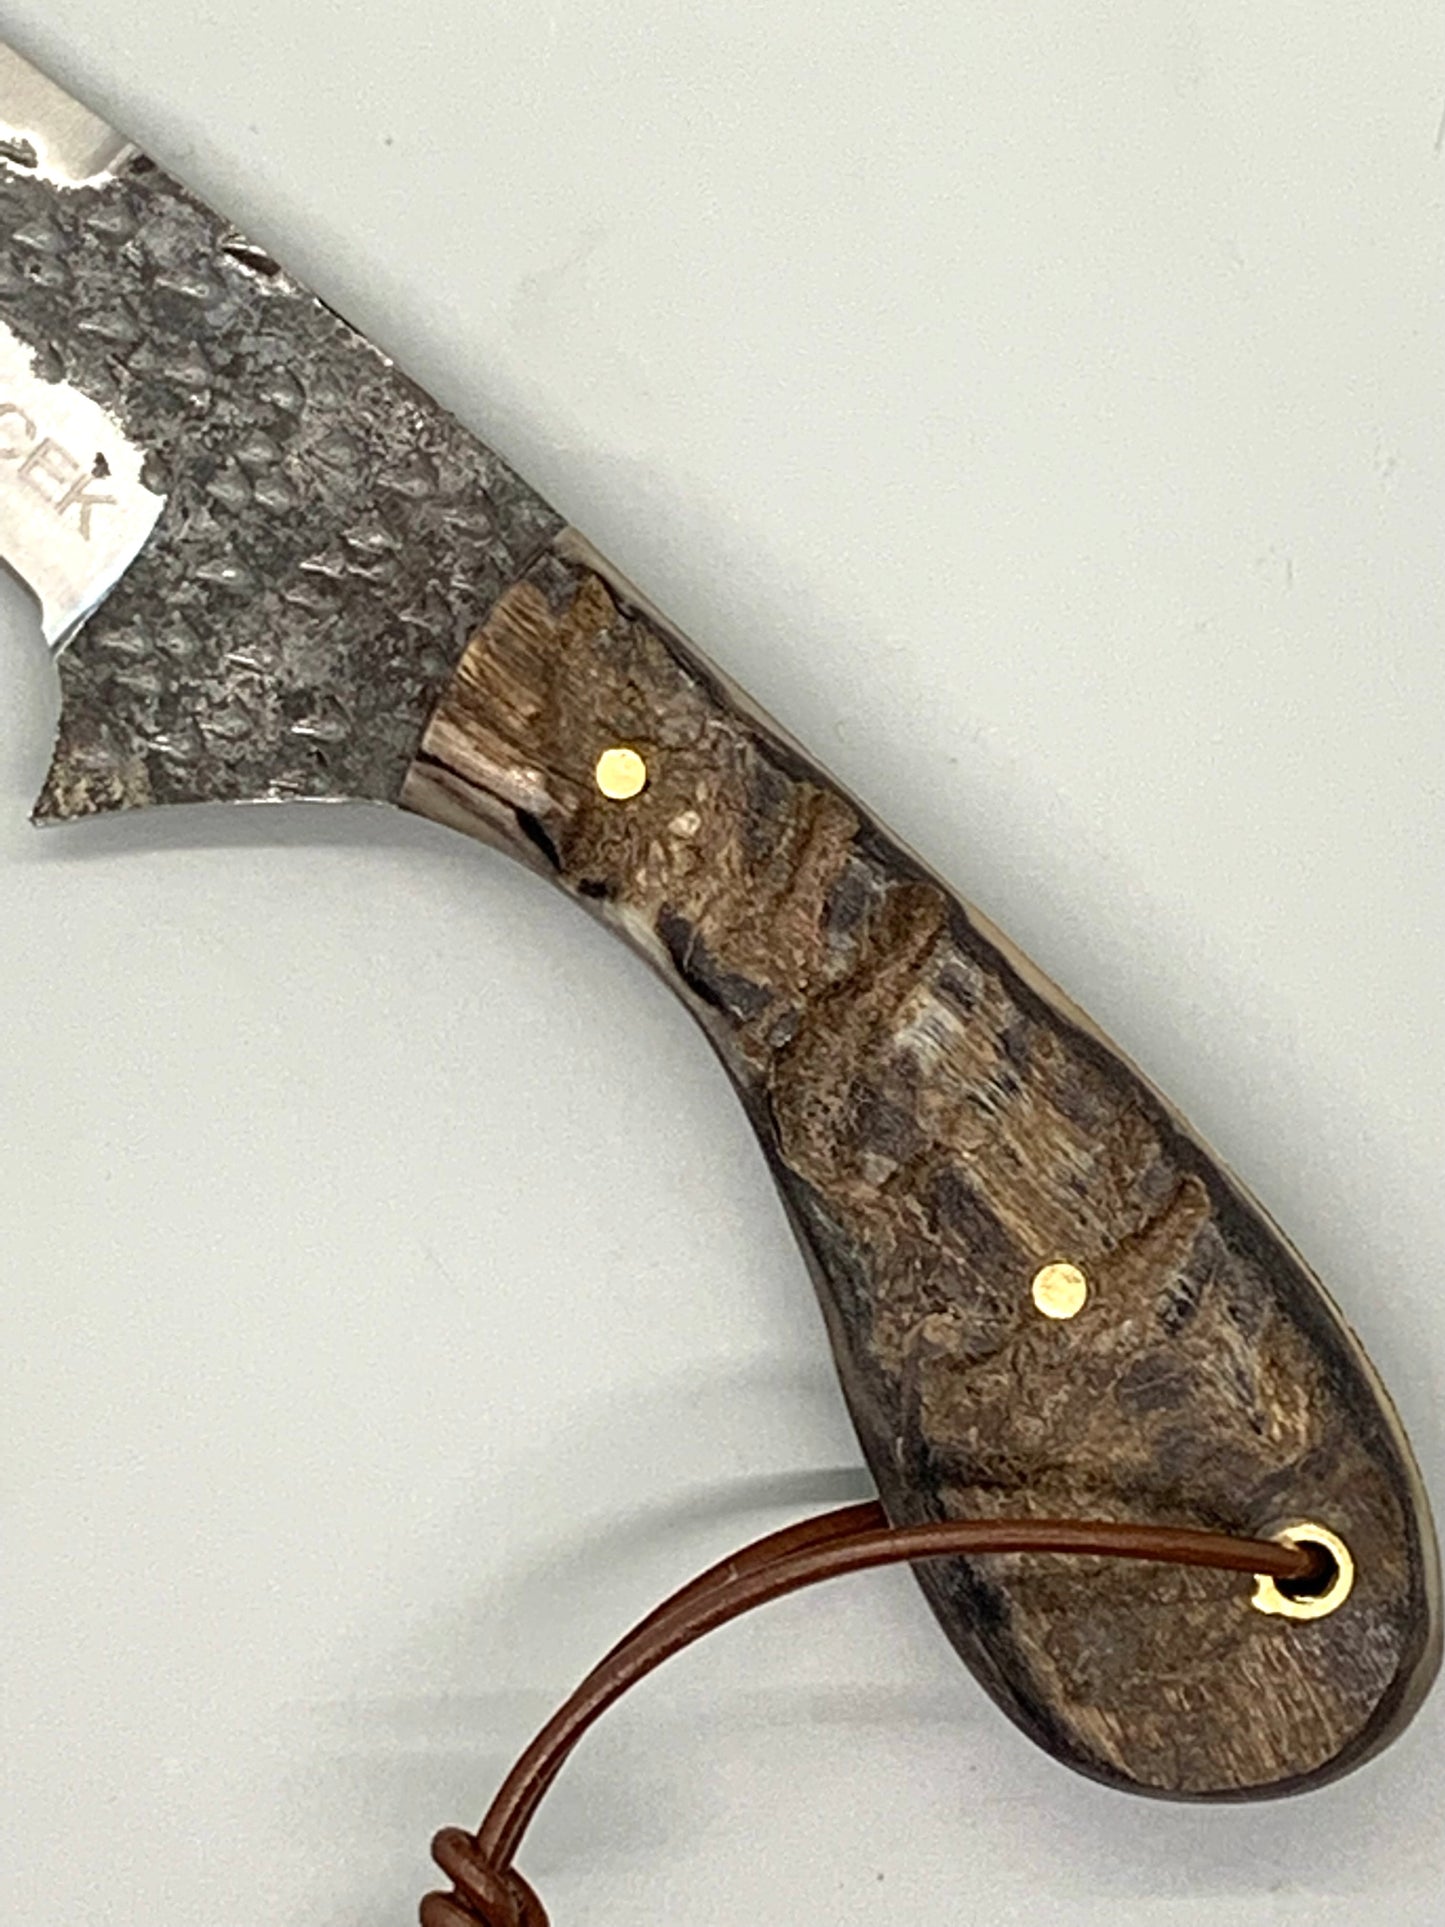 FX-021 Ram Horn Hunting Knife w/Stainless Steel Blade (440c)